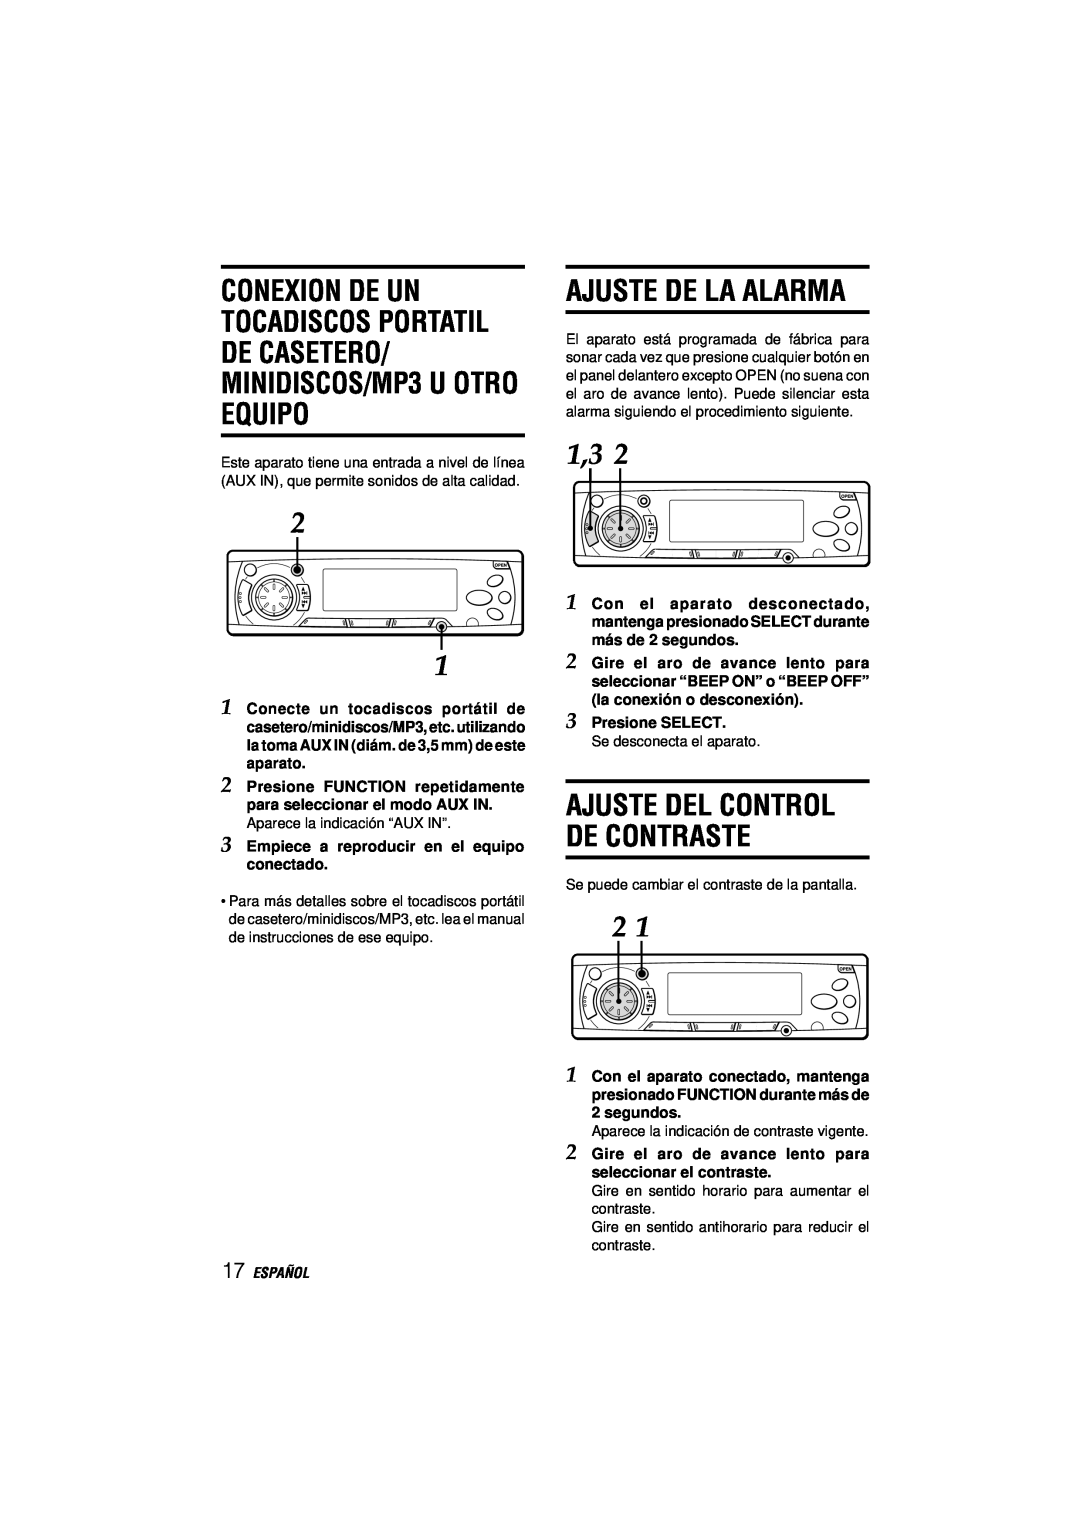 Aiwa CDC-MP3 manual Ajuste De La Alarma, Ajuste Del Control De Contraste, Español 